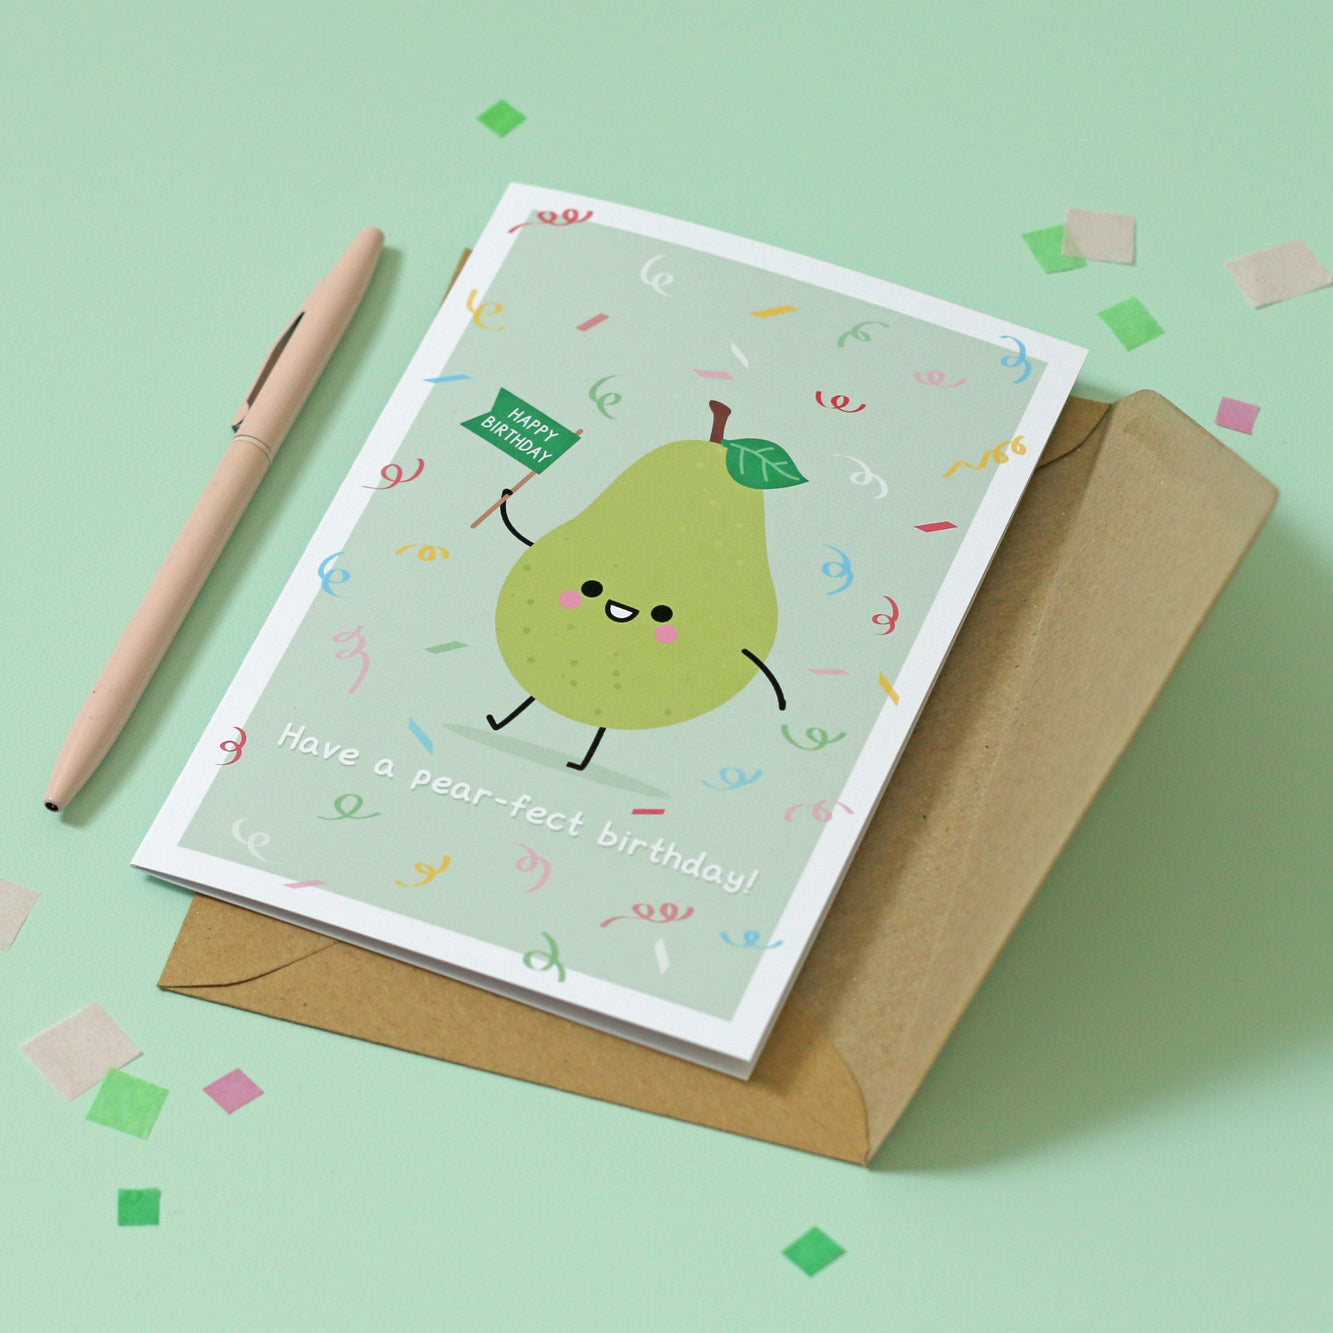 Cute green birthday card pear-fect birthday by hannahdoodle